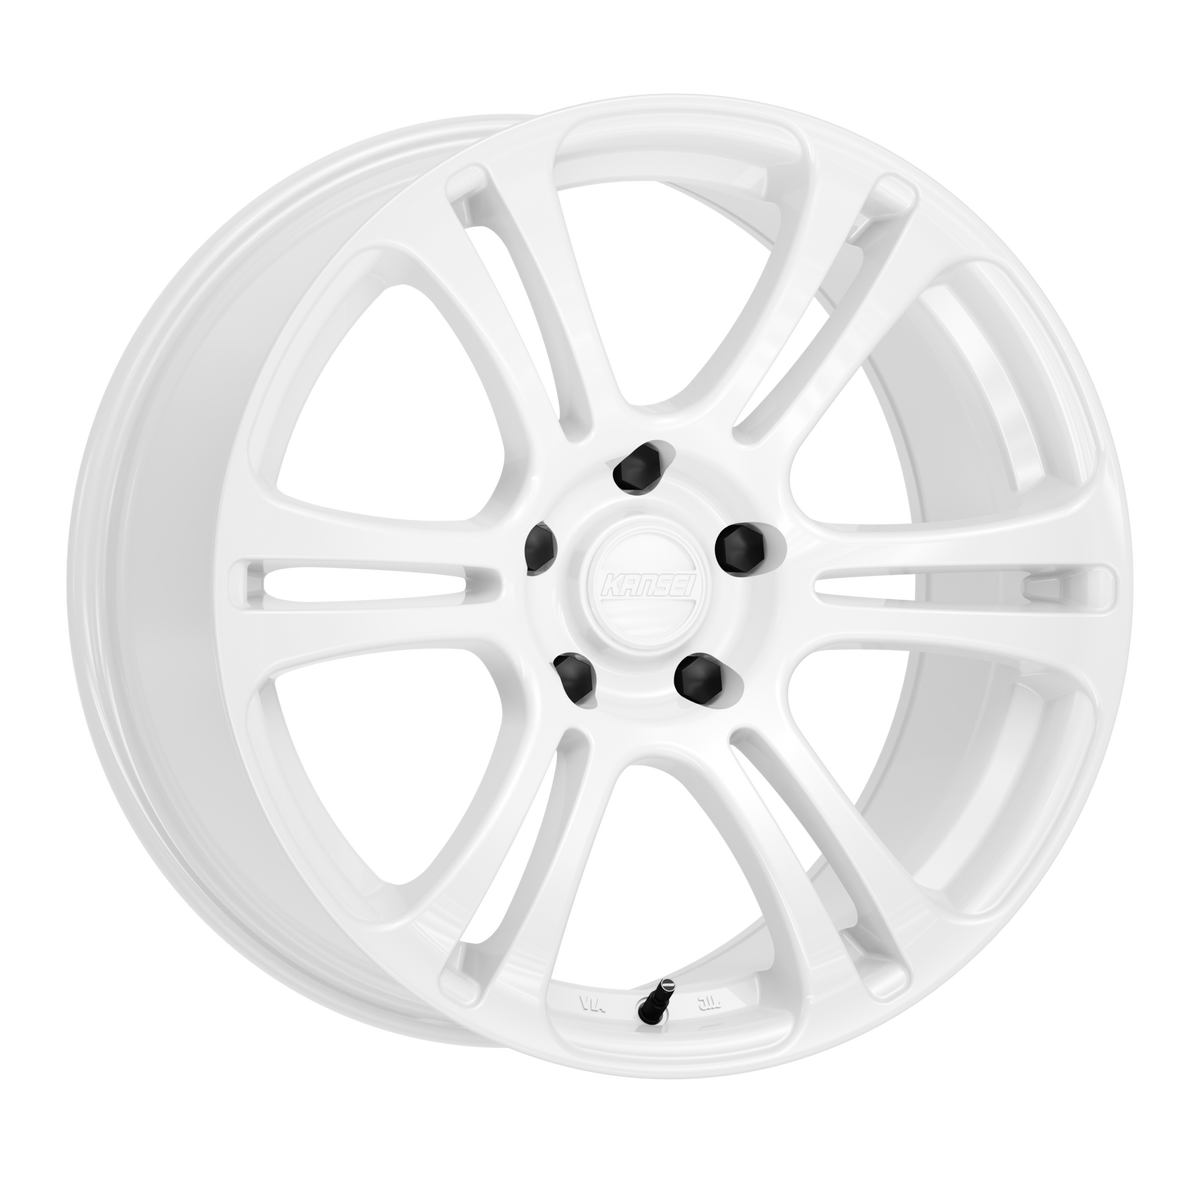 K16W NEO Wheel, Size: 18" x 10.50", Bolt Pattern: 5 x 112 mm, Backspace: 6.62" [Finish: Gloss White]